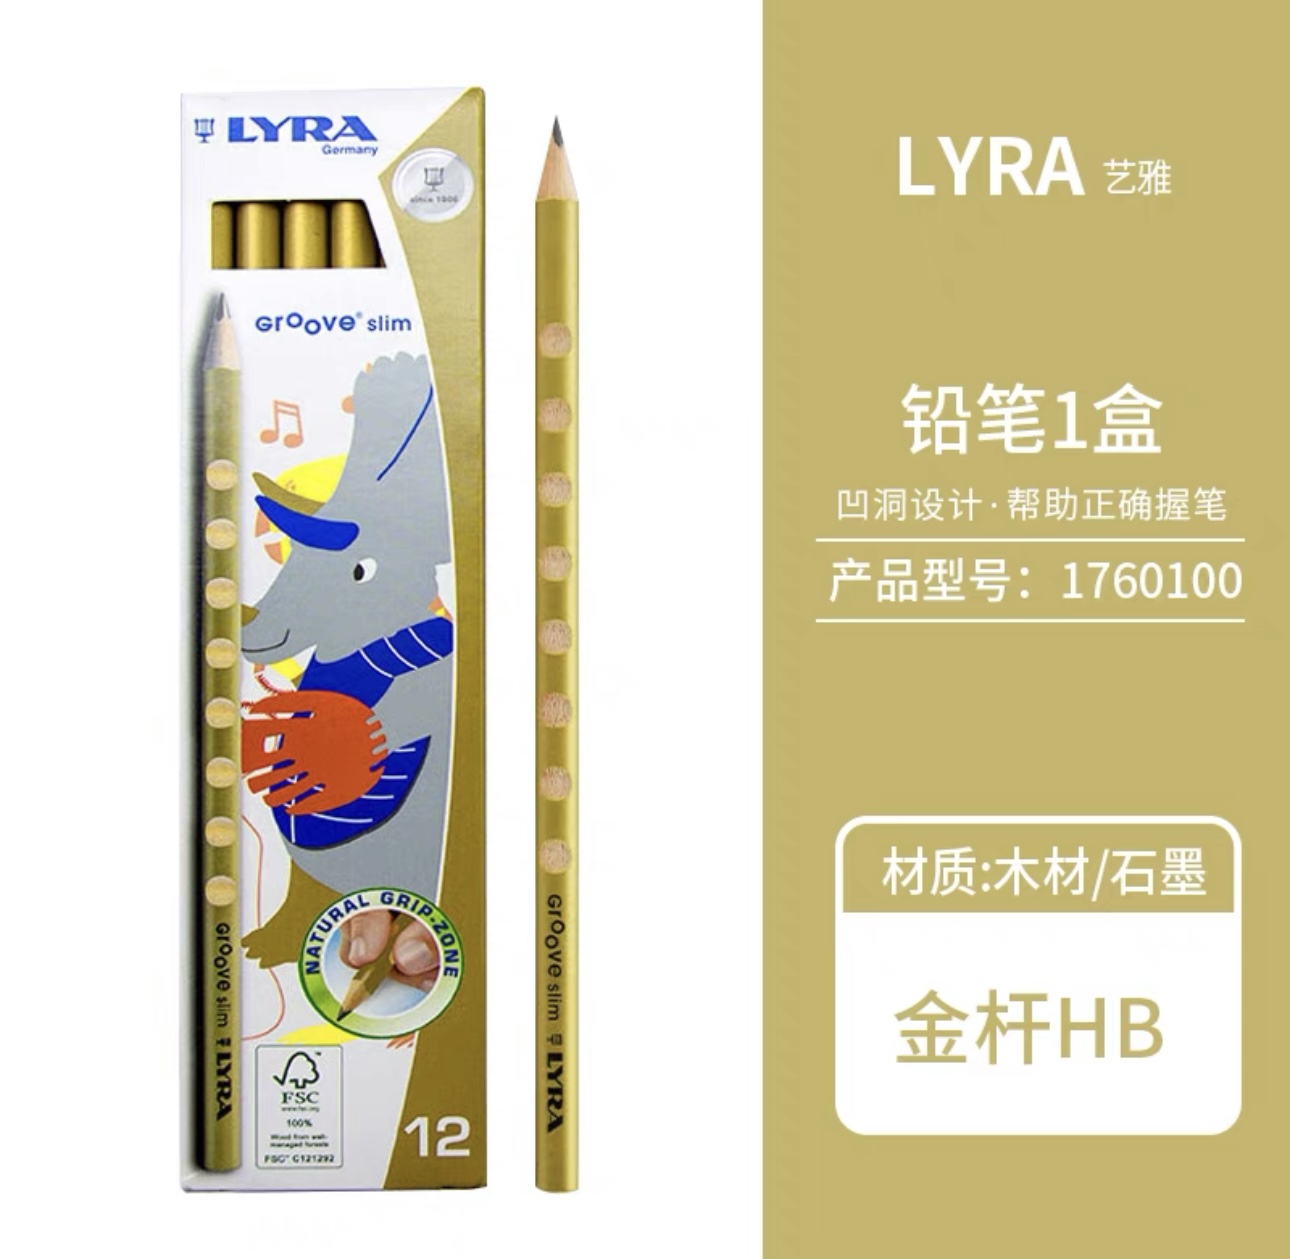 LYRA HB Gold Pole (12pcs/box) Triangular Hole Pencil